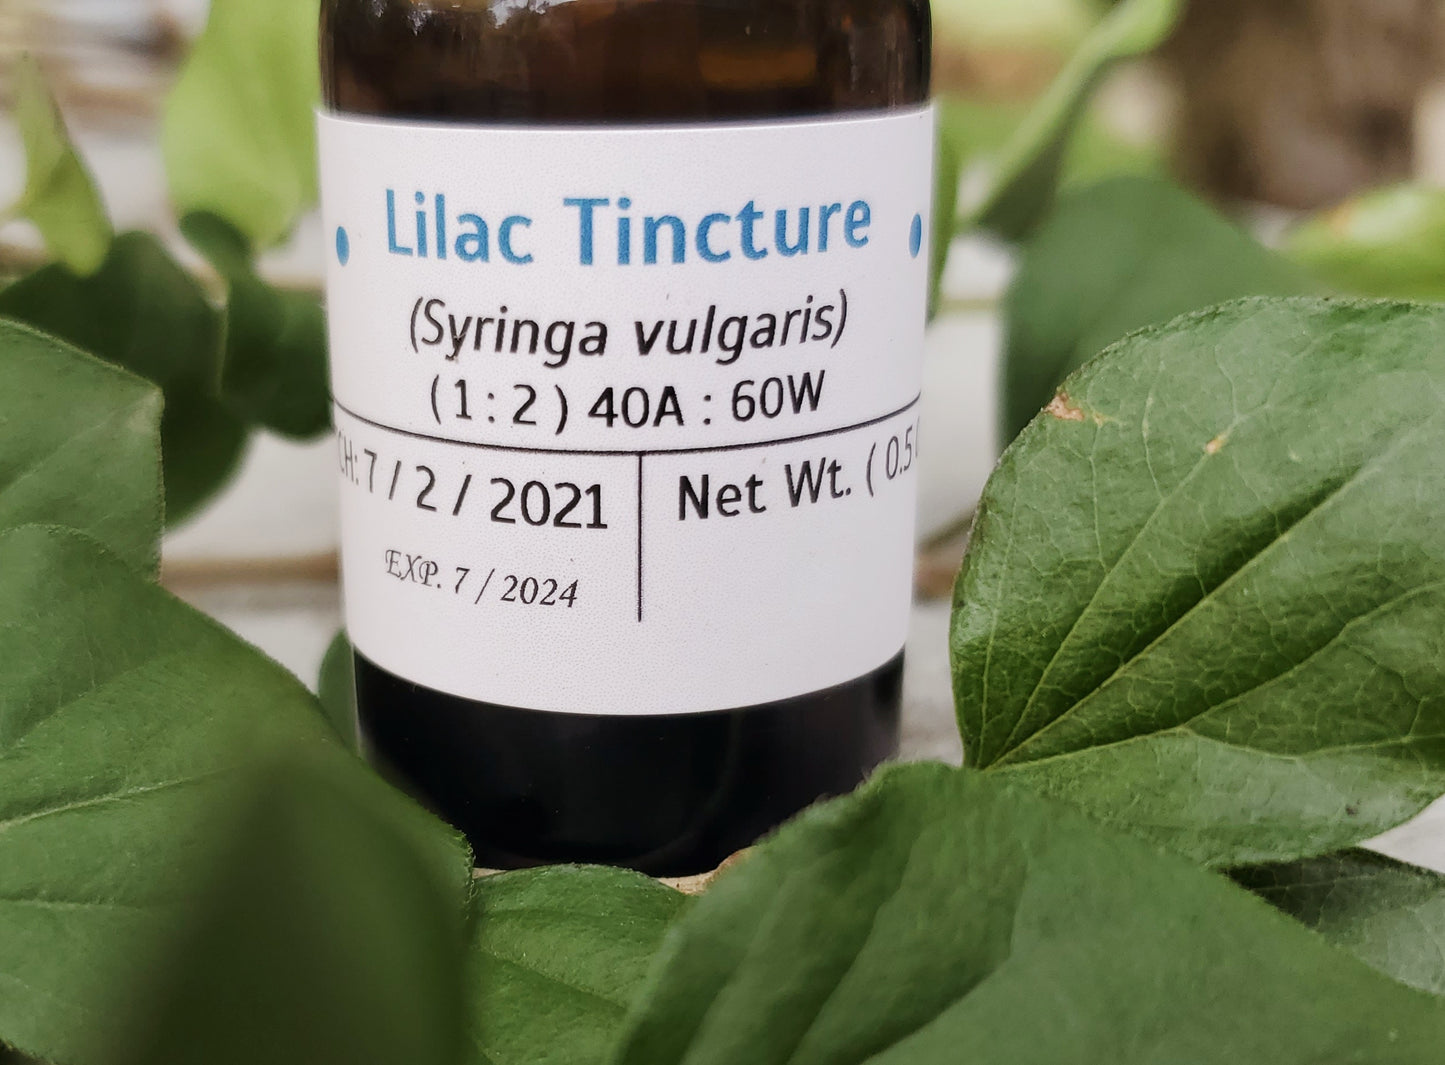 Lilac Tincture